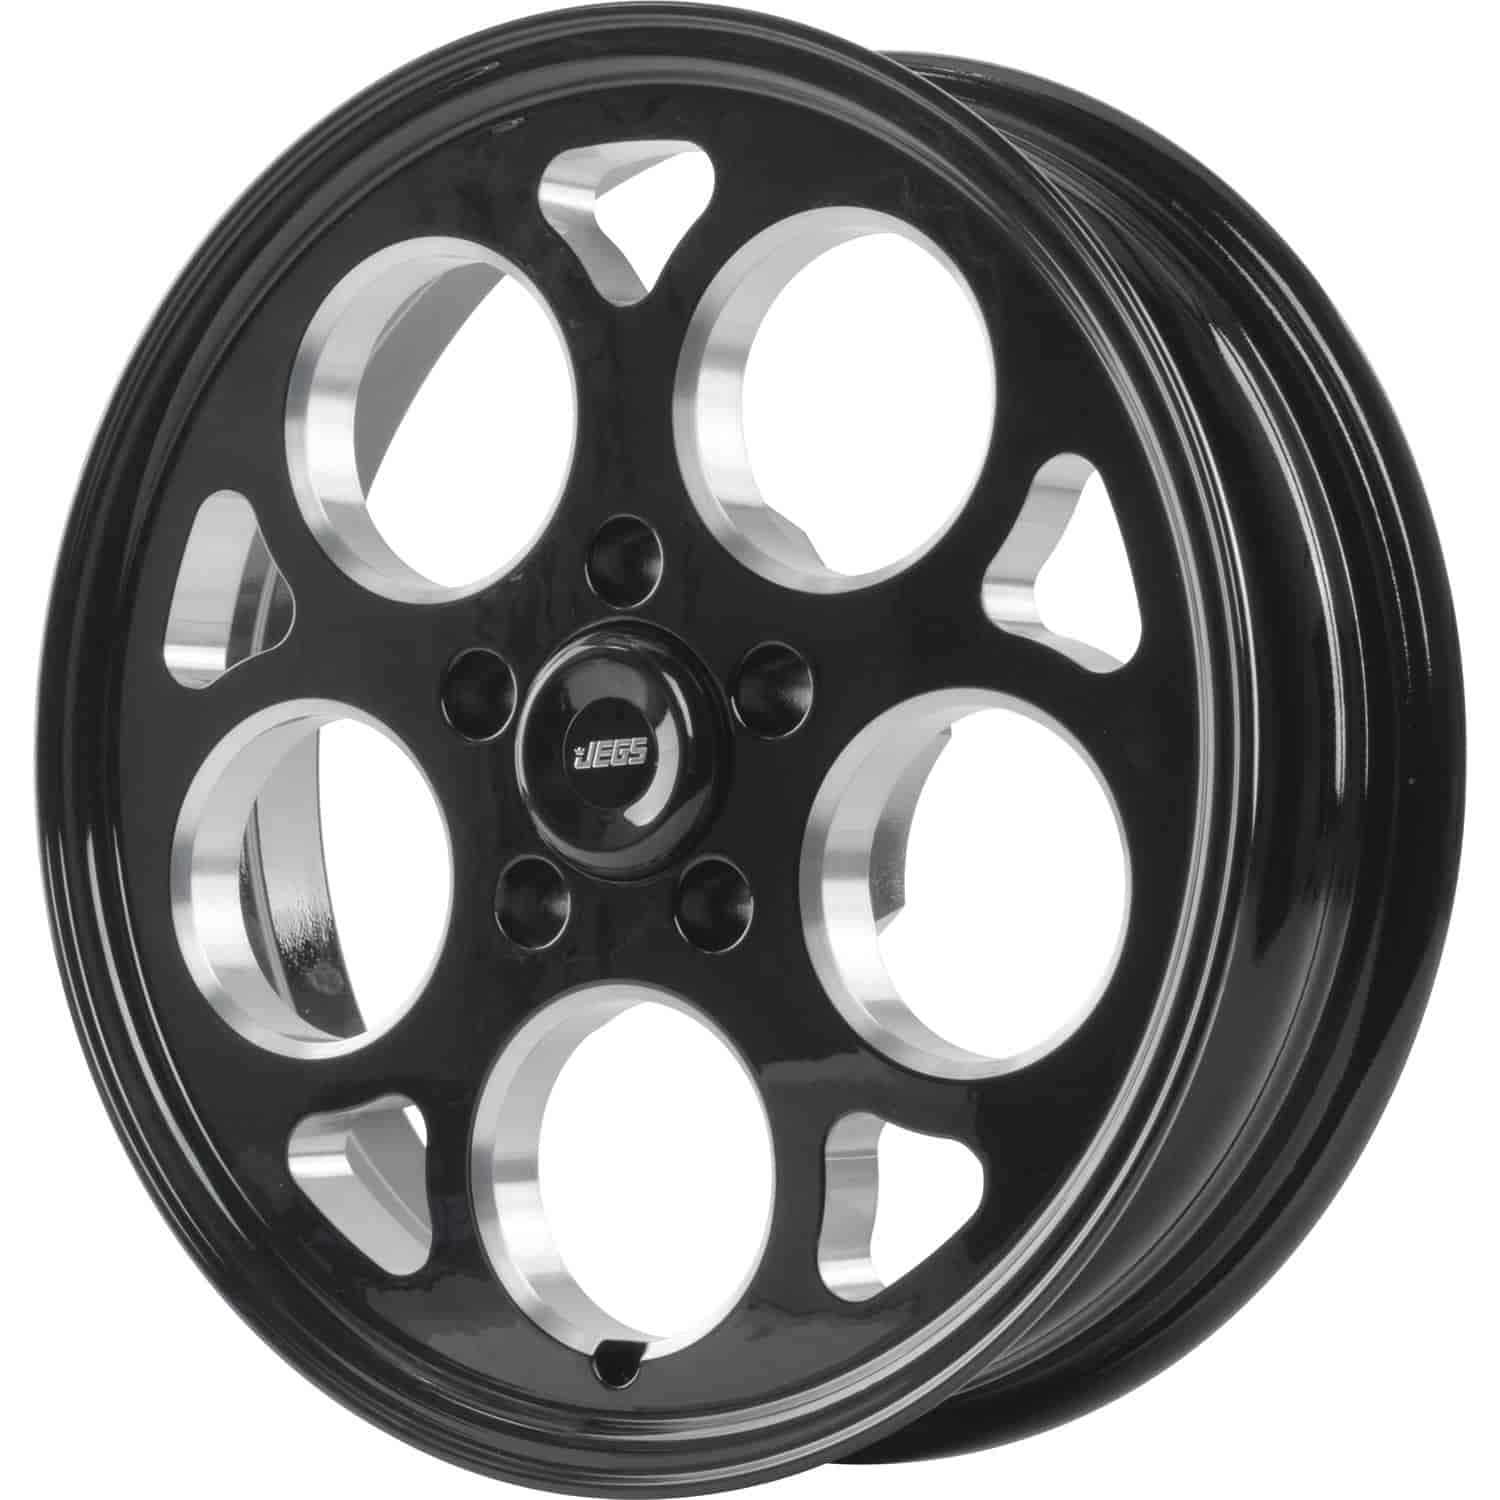 SSR Mag Wheel [Size: 17" x 4.5"] Black